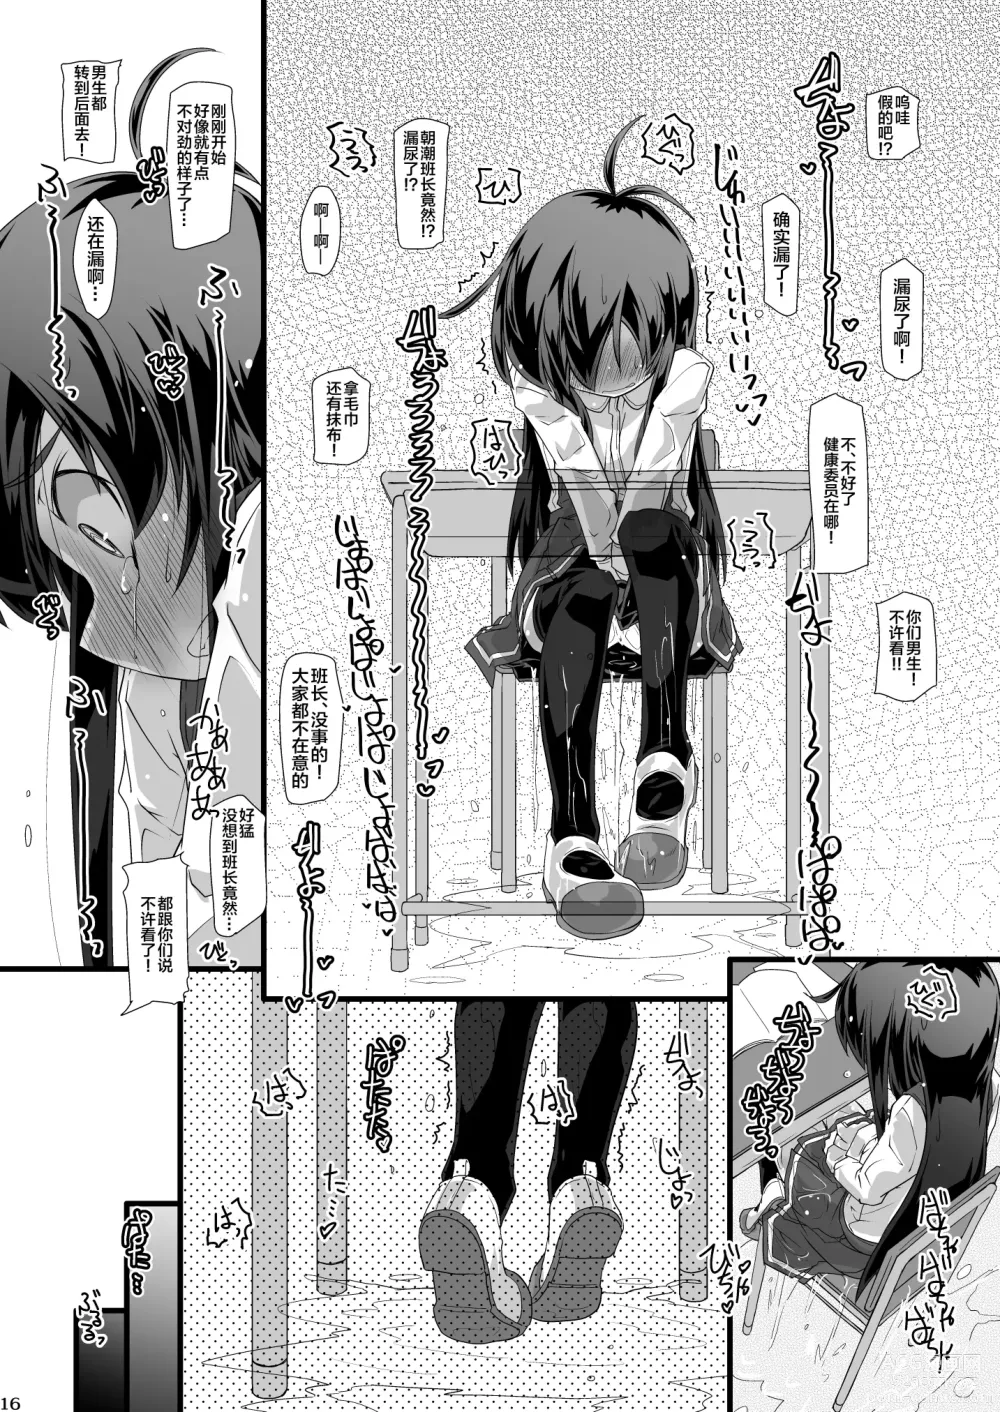 Page 16 of doujinshi 今天课间时间班长她要是想要去厕所的话大家就一起拼命阻碍她吧